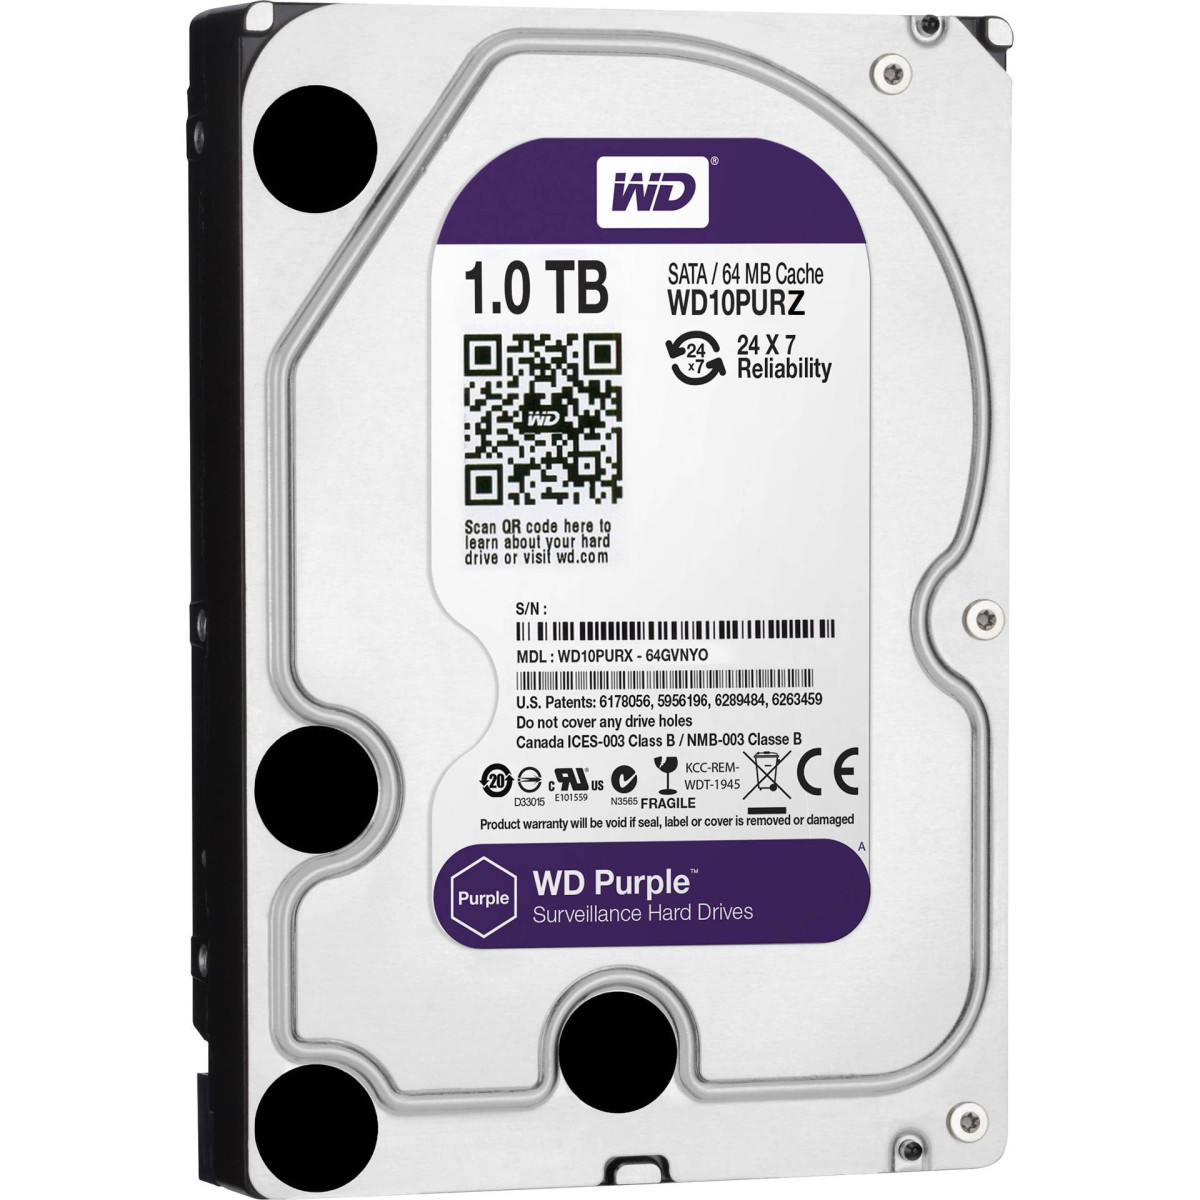 Жесткий диск Western Digital 1TB Purple (WD10PURX)